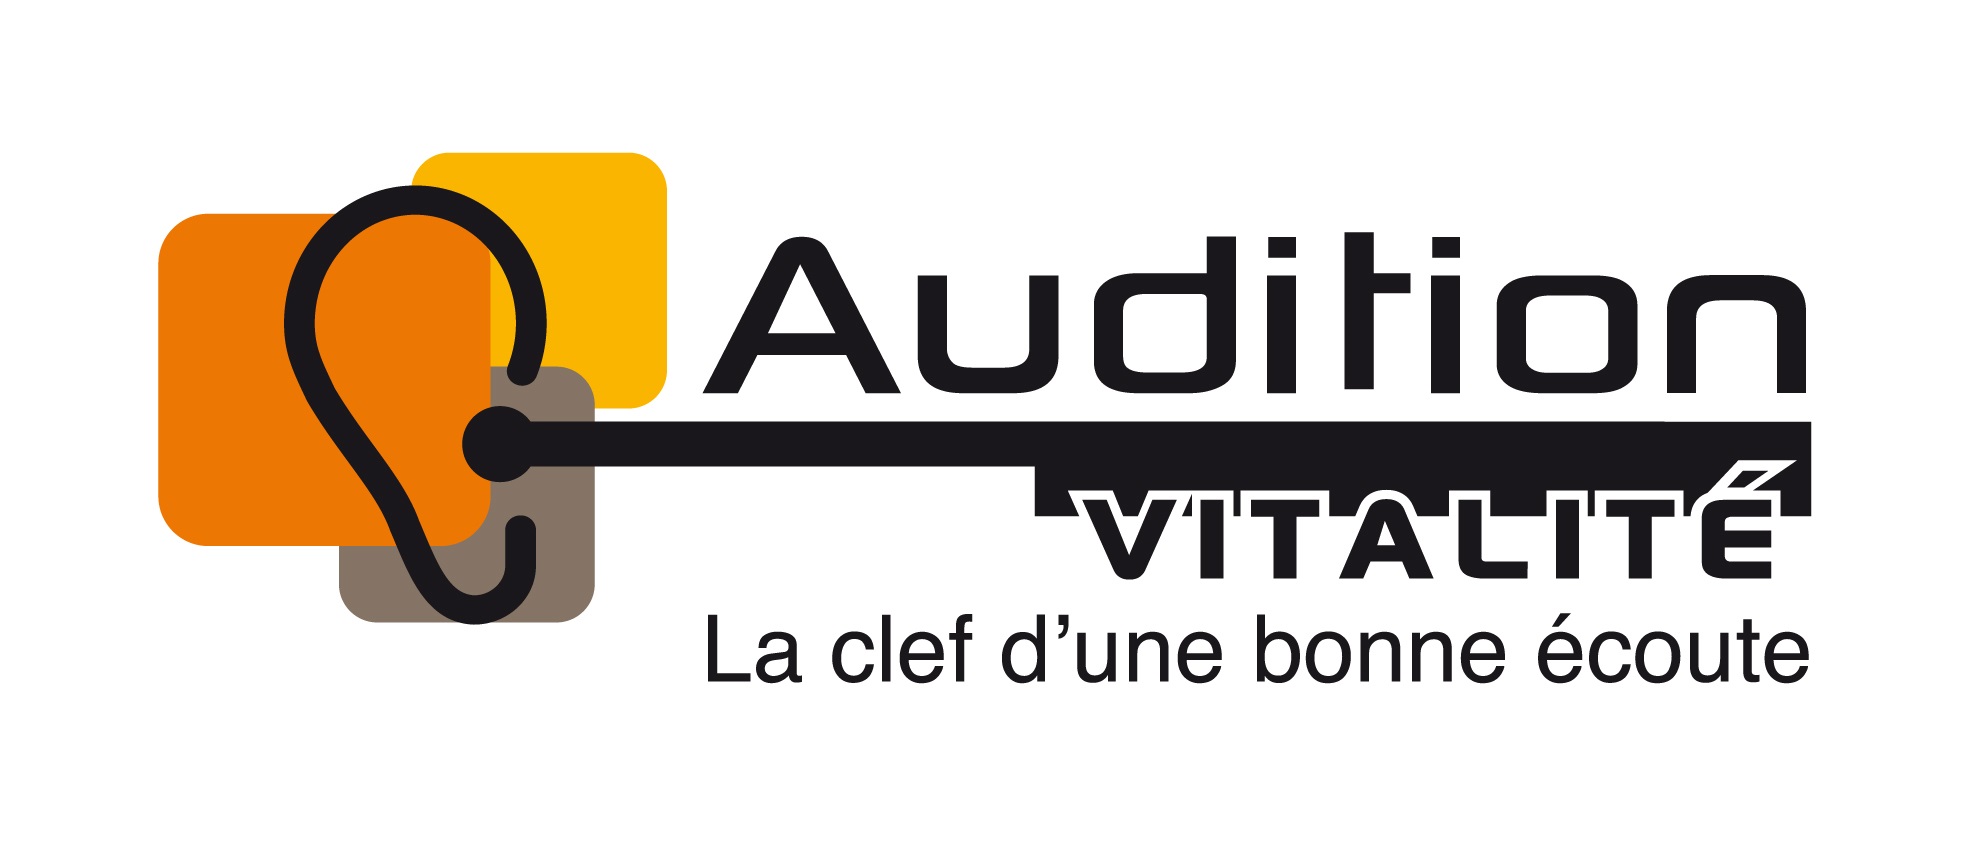 (Français) AUDITION VITALITE